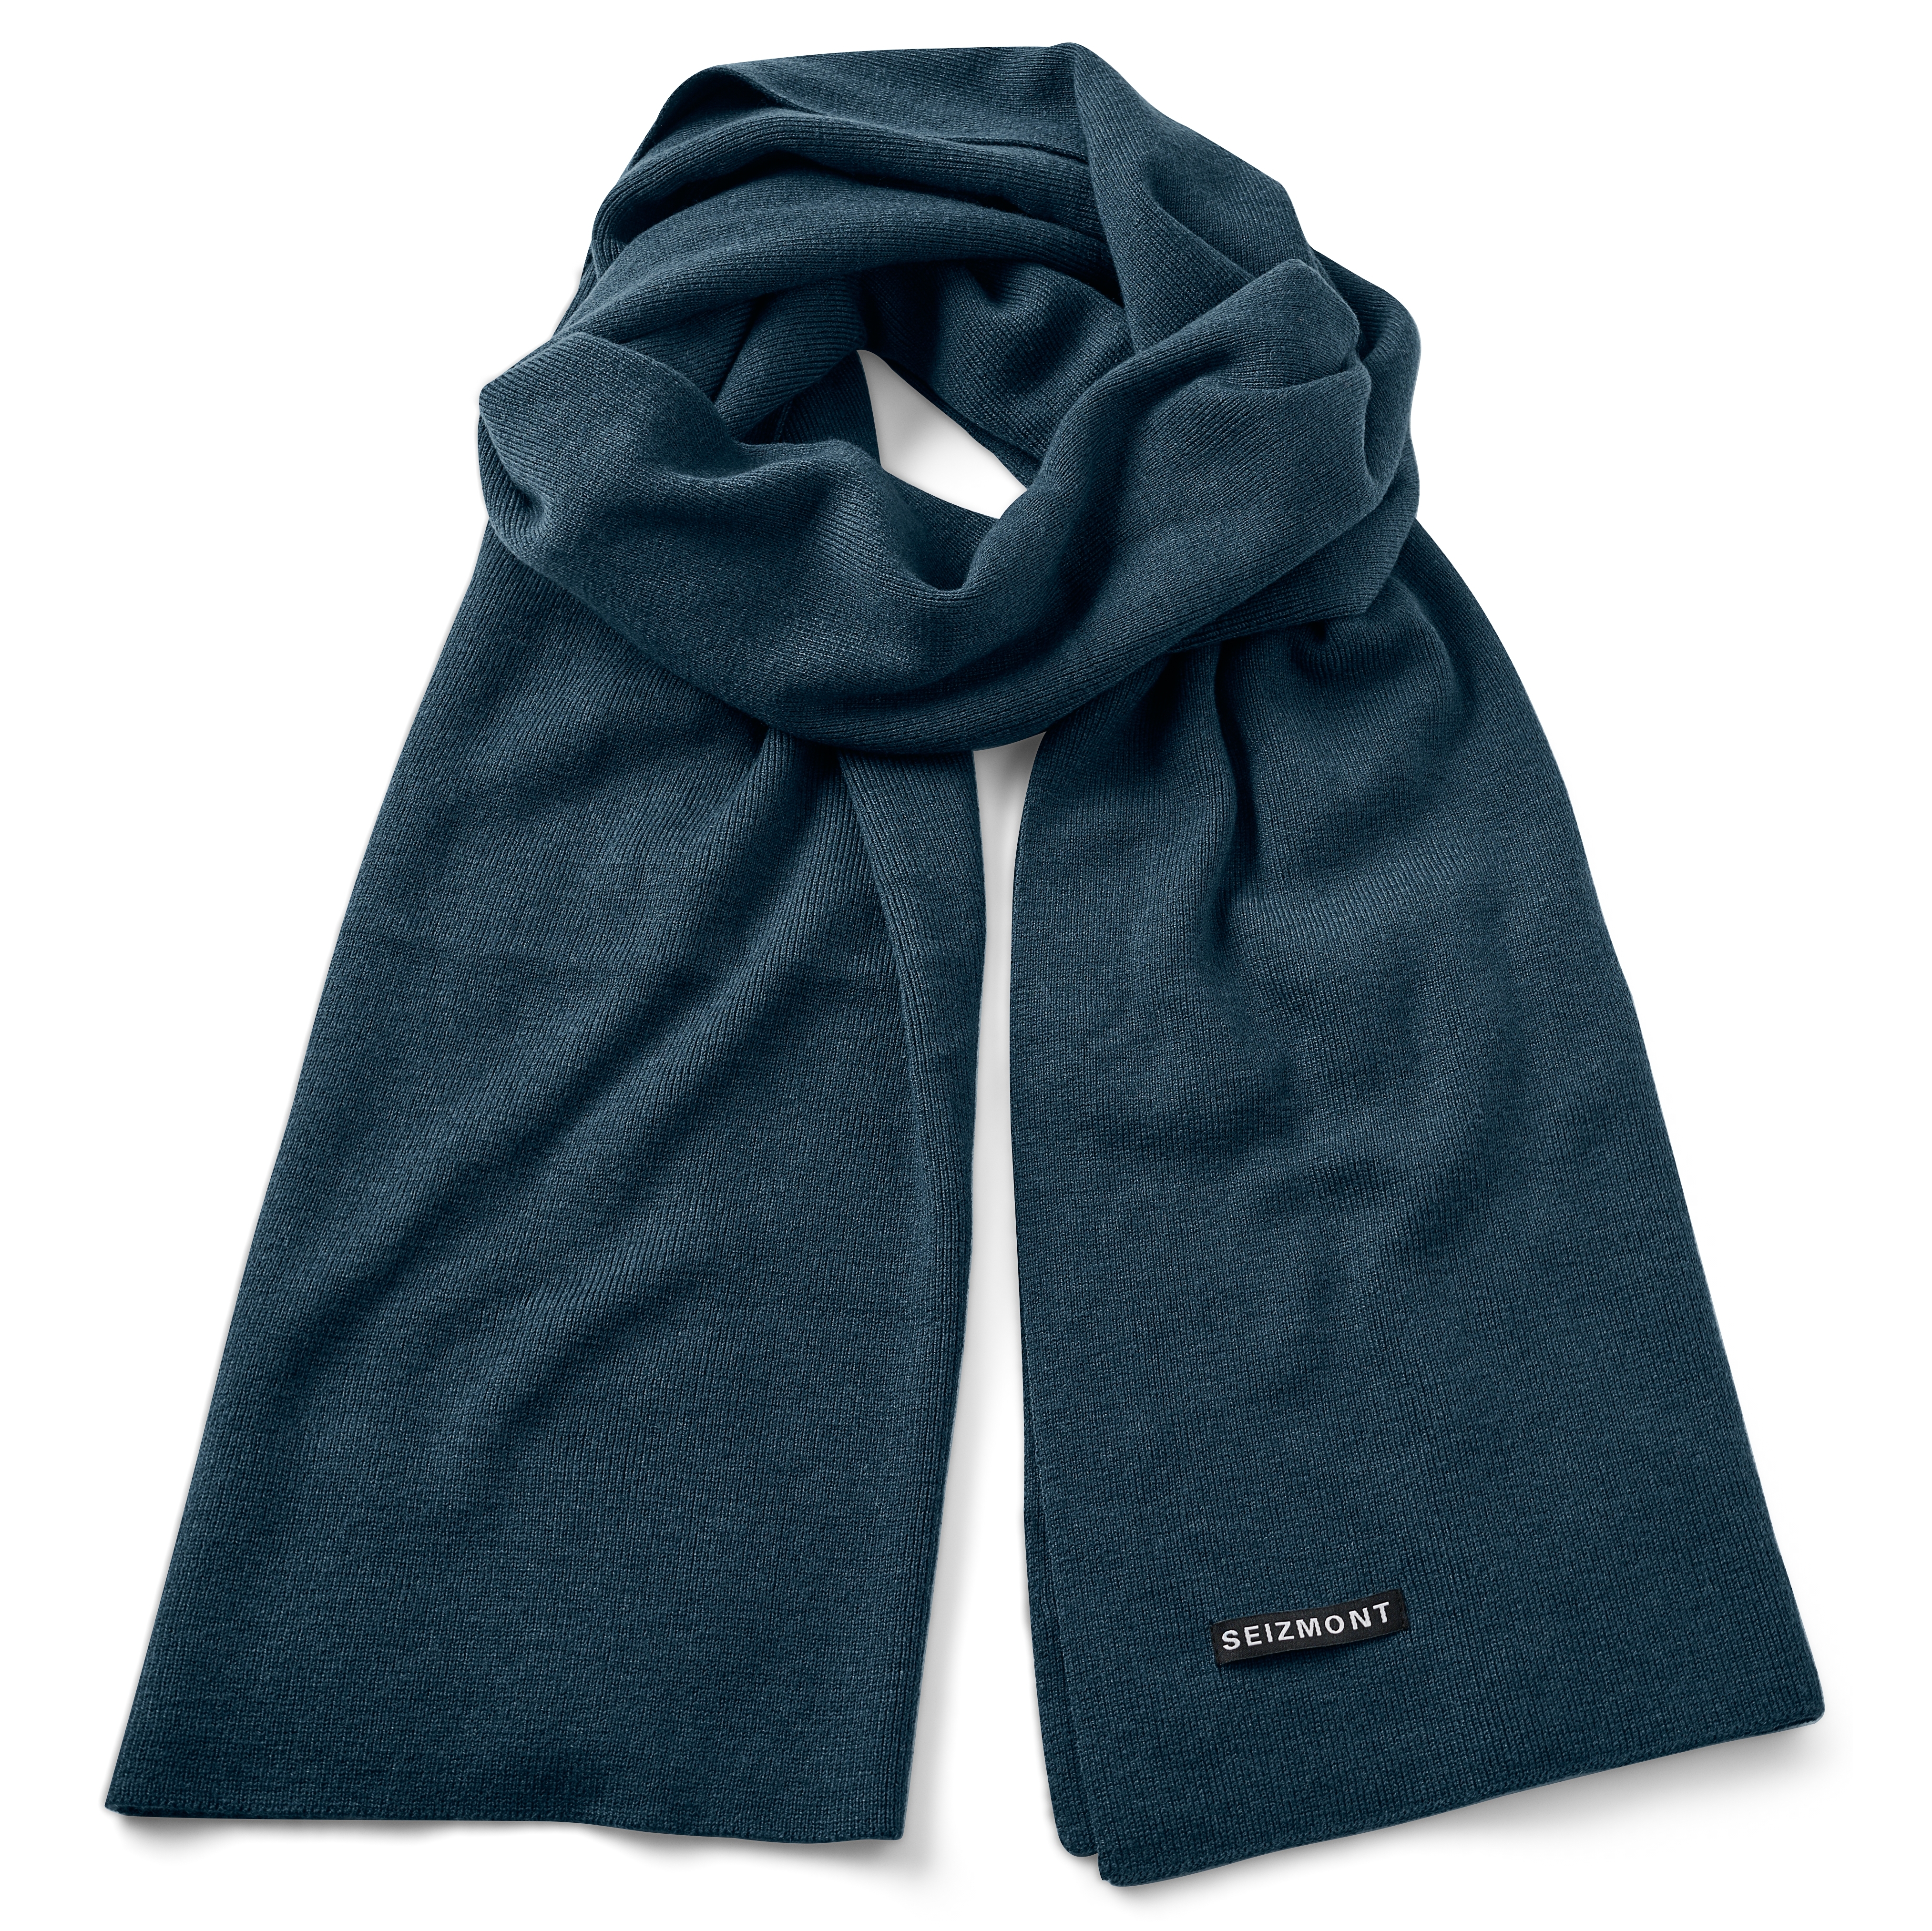 Hiems | Blue Wool-blend Scarf In stock! | | Seizmont